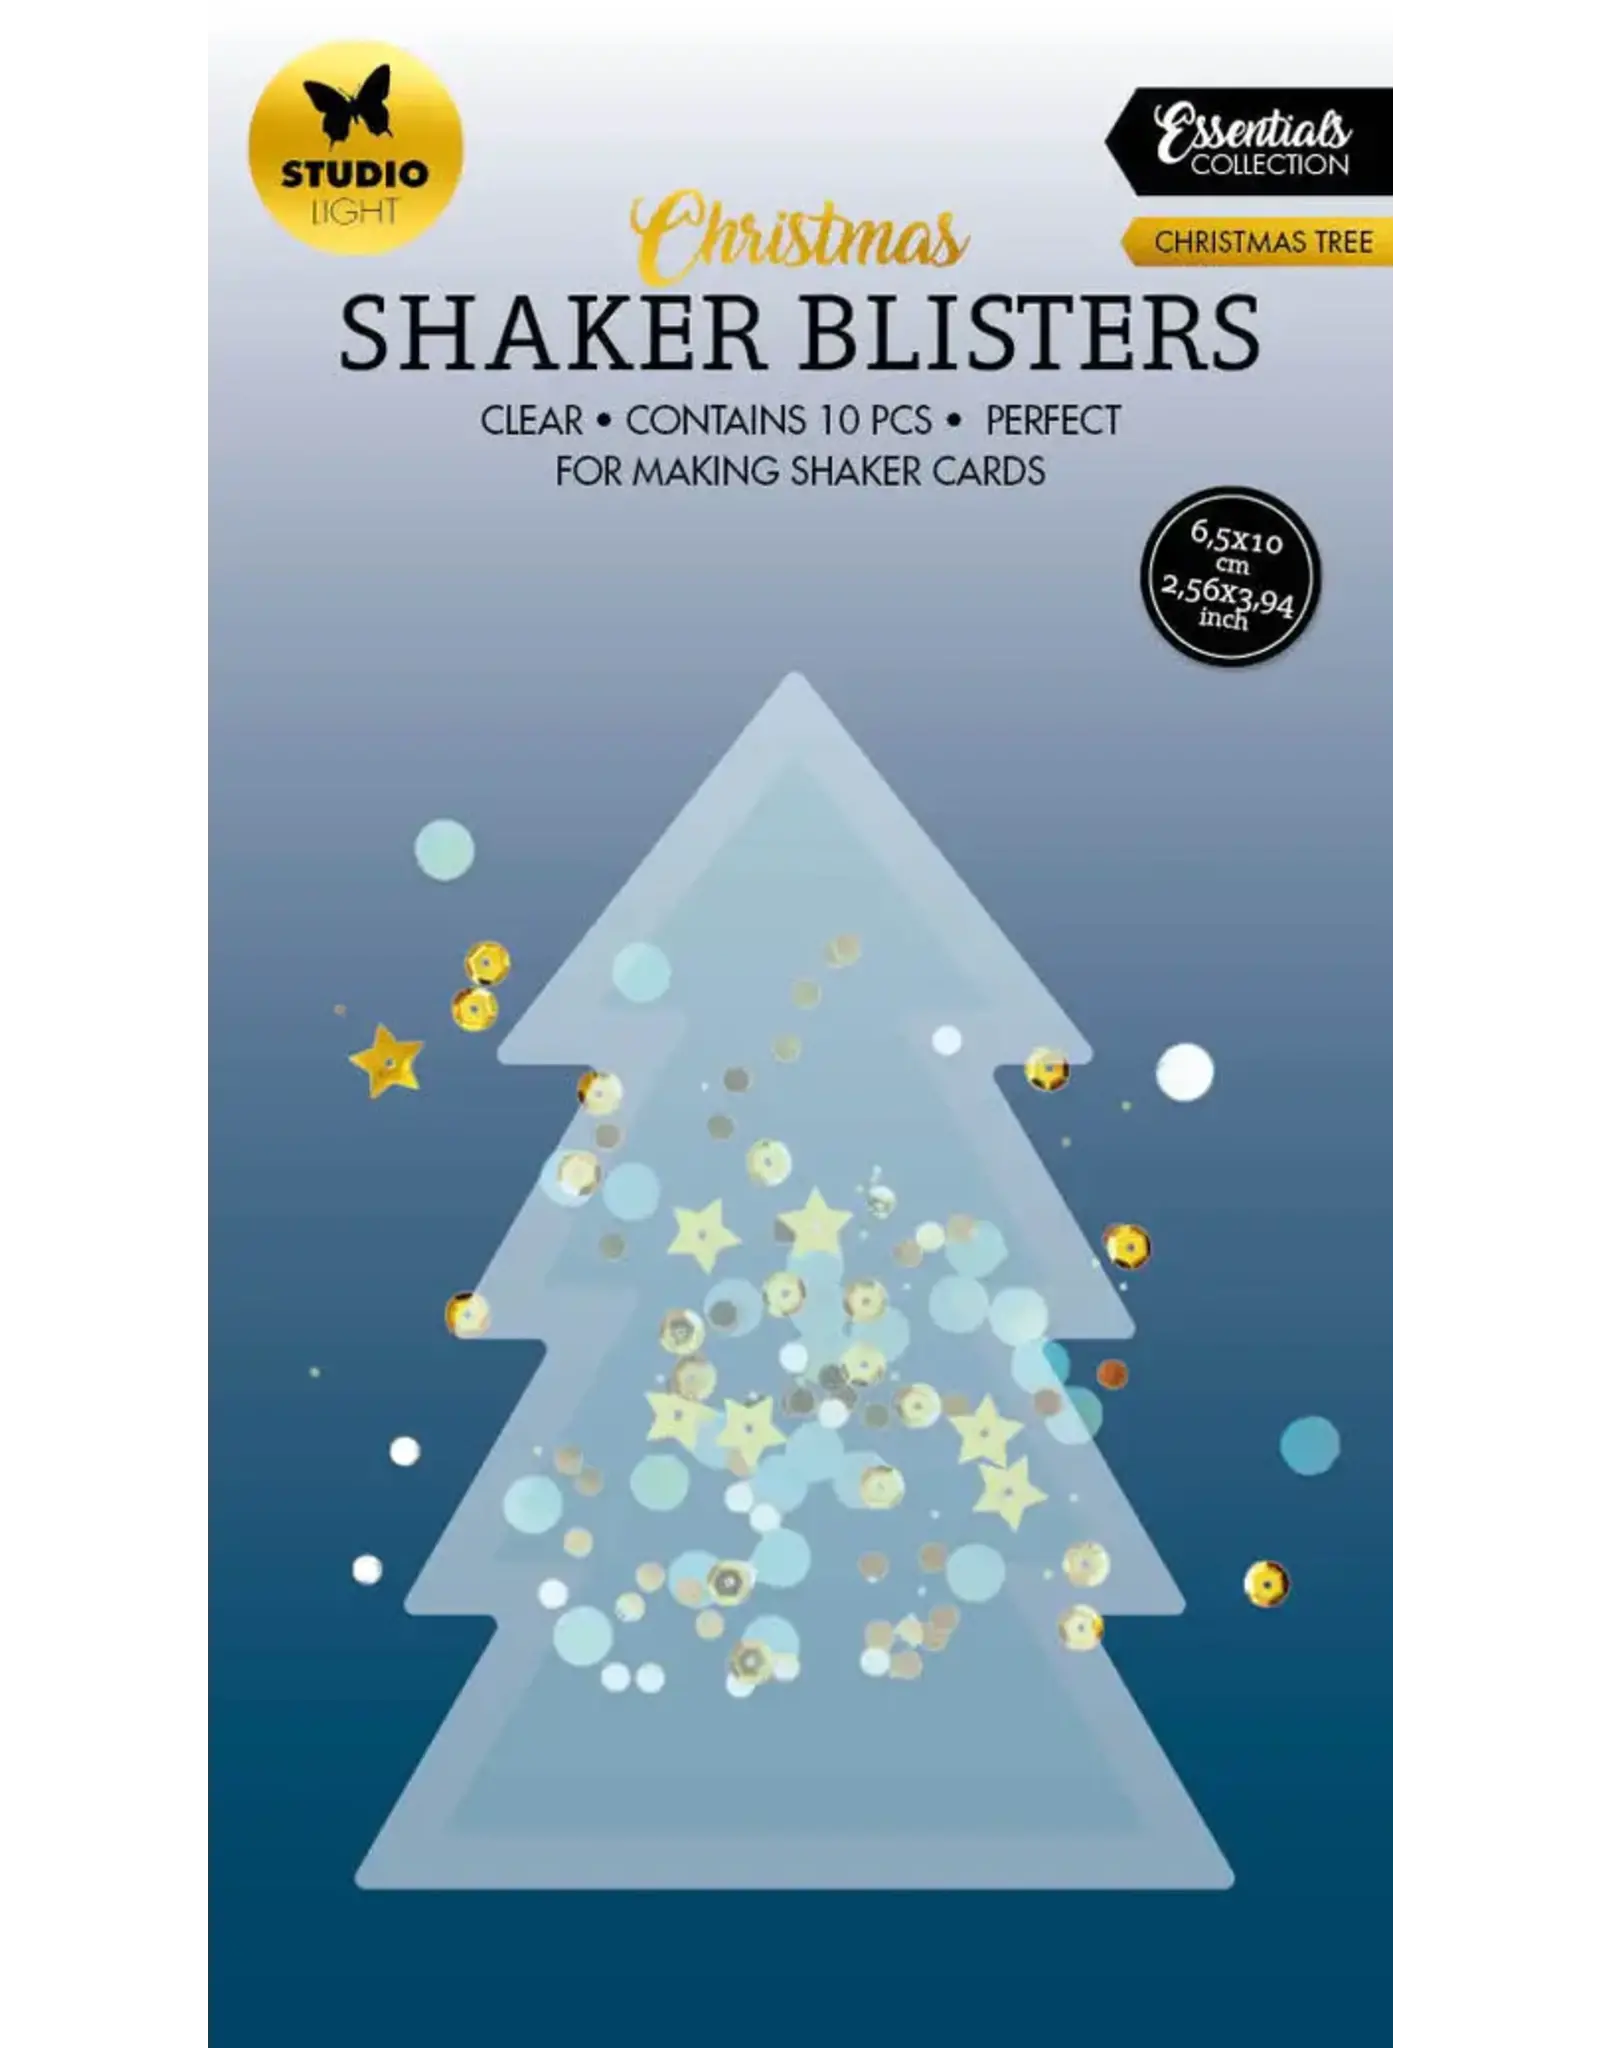 STUDIOLIGHT STUDIOLIGHT ESSENTIALS COLLECTION CHRISTMAS TREE SHAKER BLISTERS